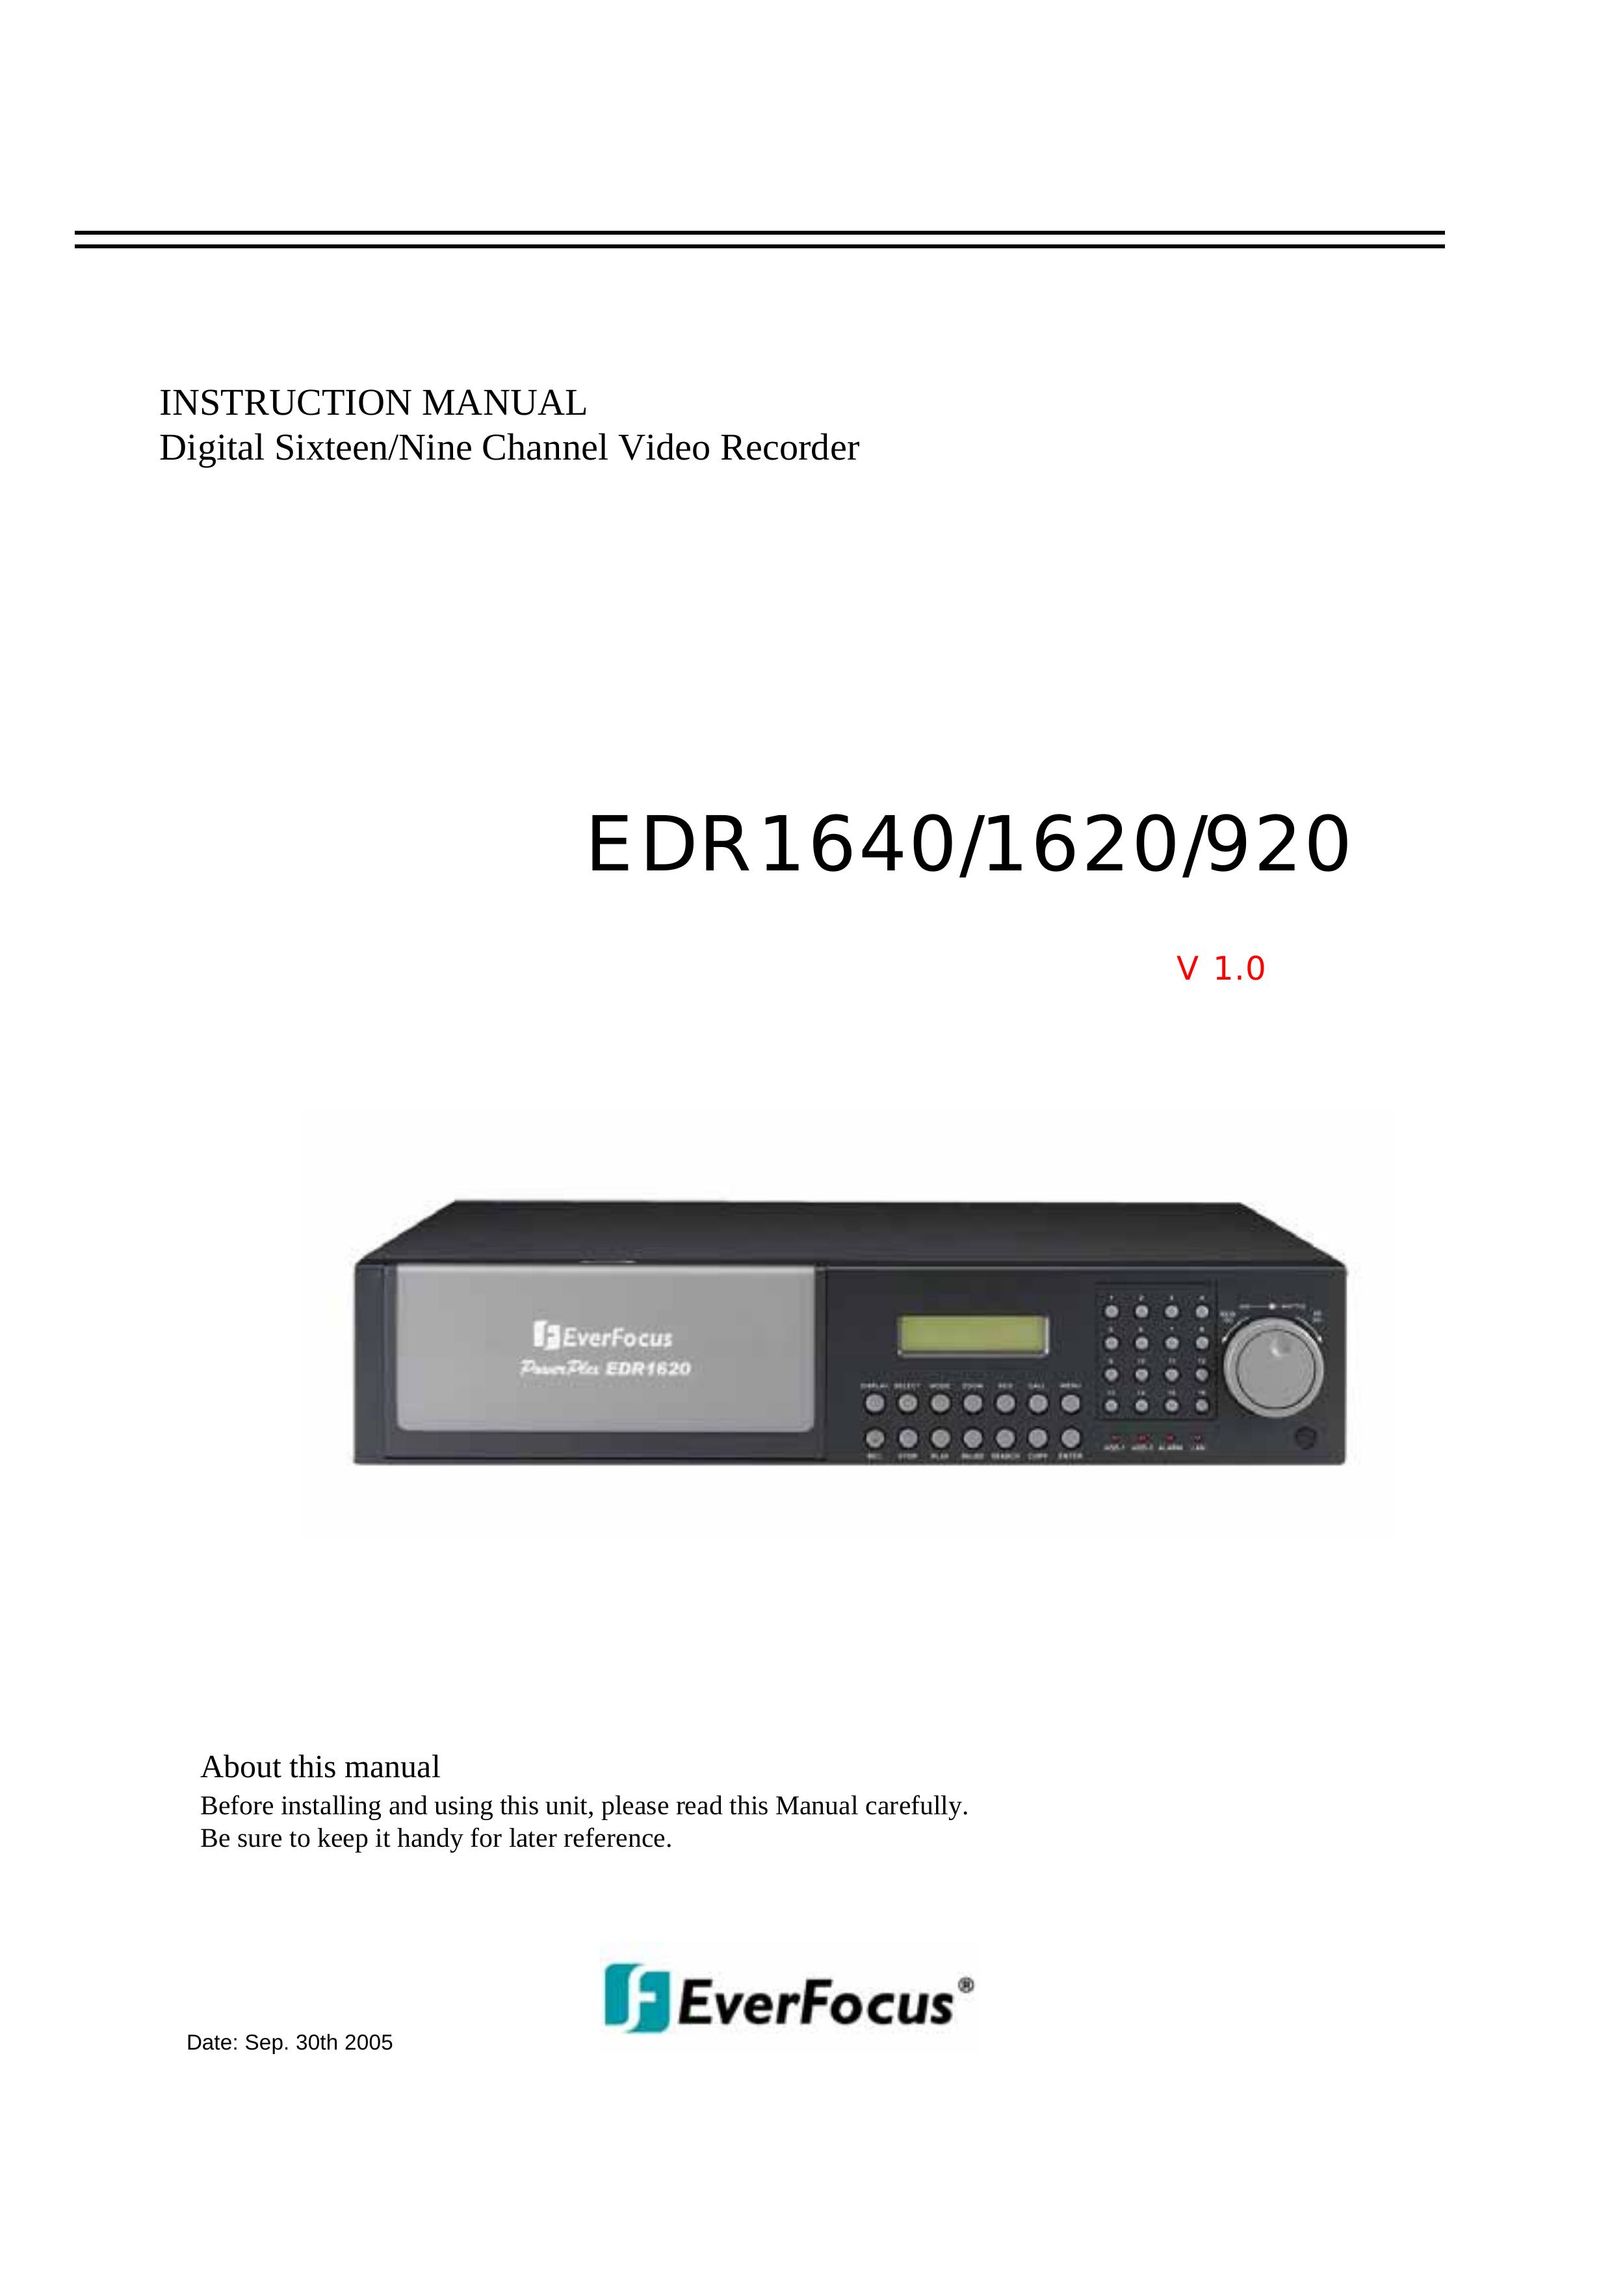 EverFocus EDR1640 DVR User Manual